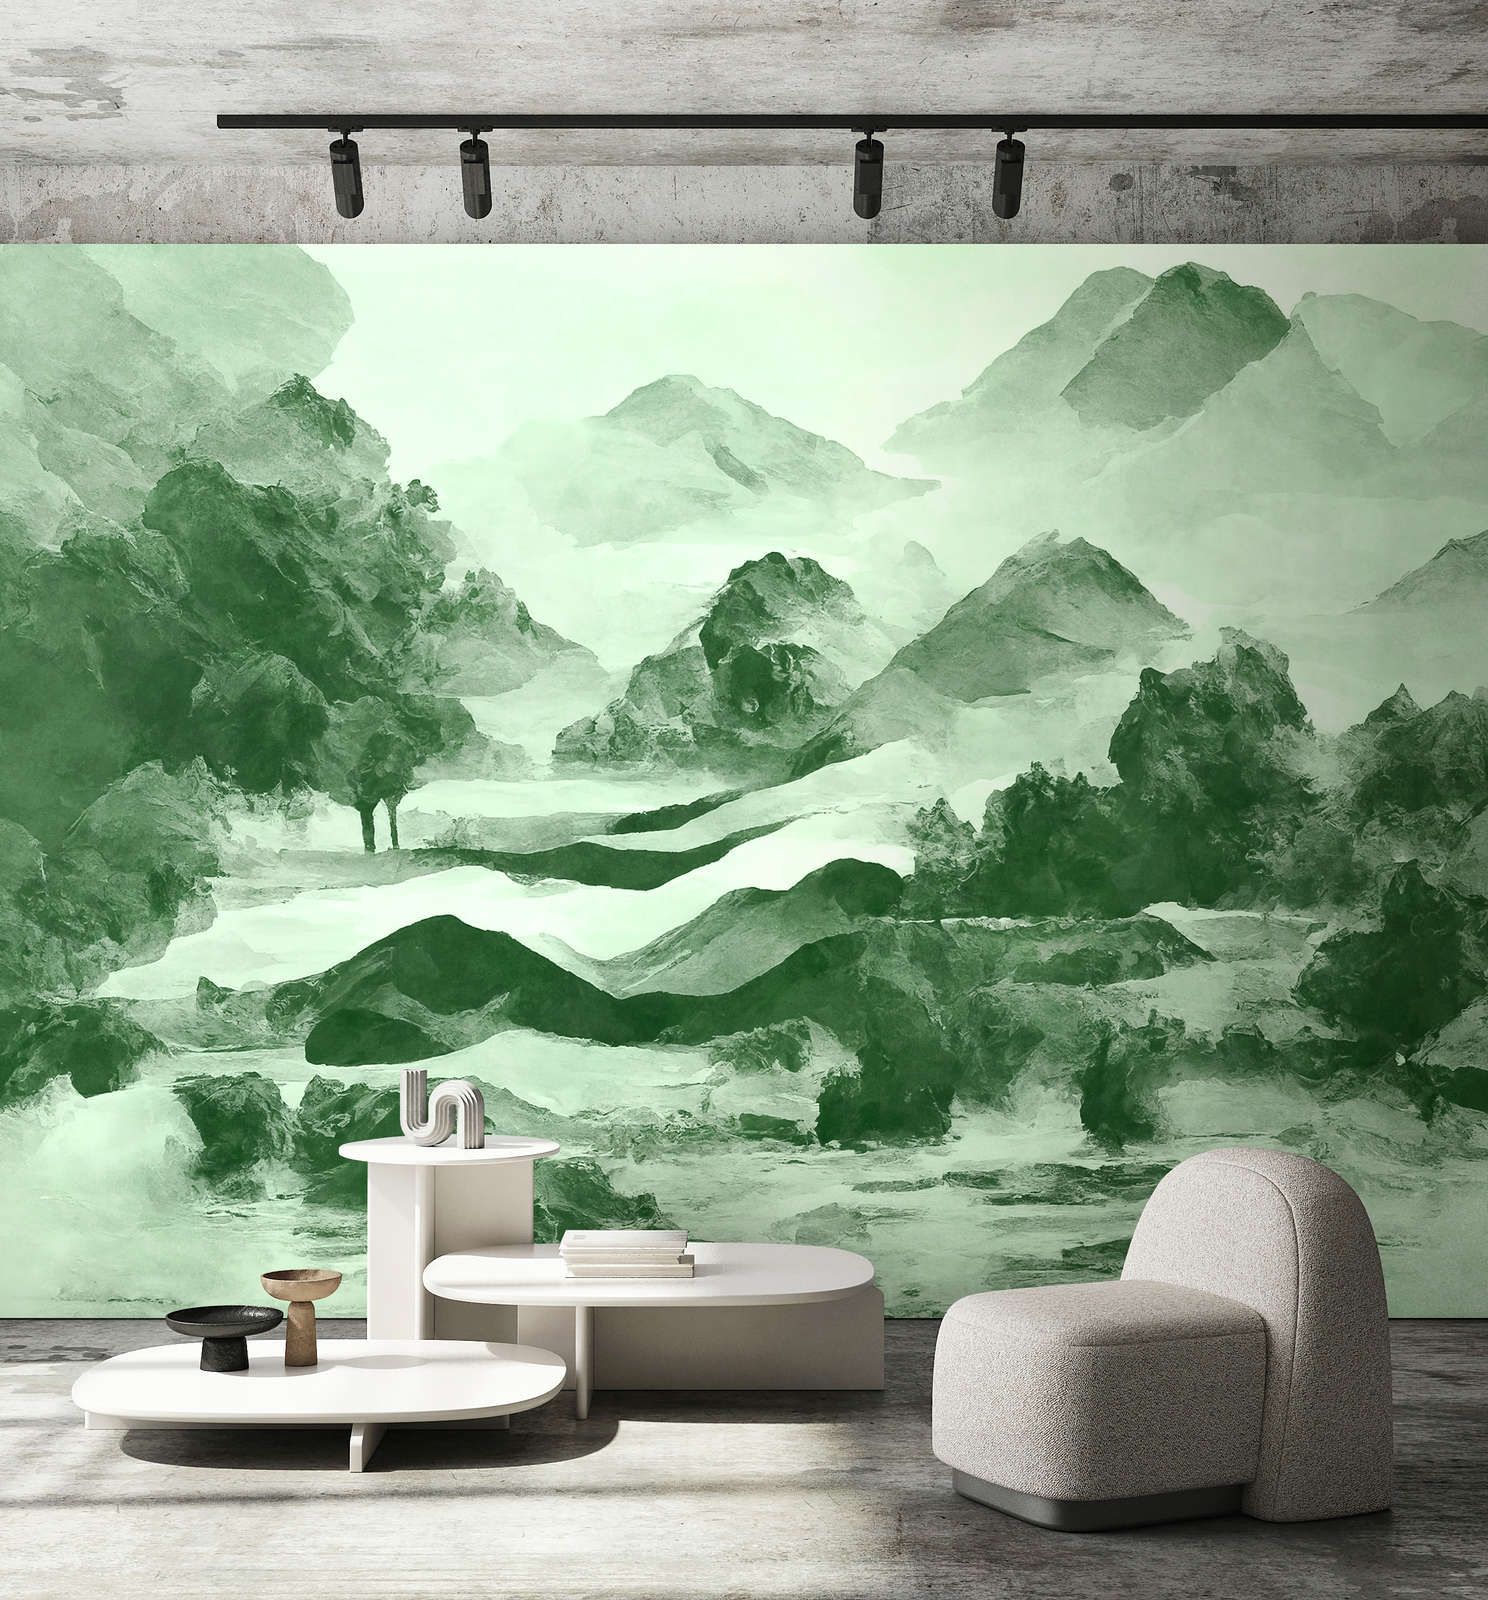             Photo wallpaper »tinterra 2« - Landscape with mountains & fog - Green | Smooth, slightly shiny premium non-woven fabric
        